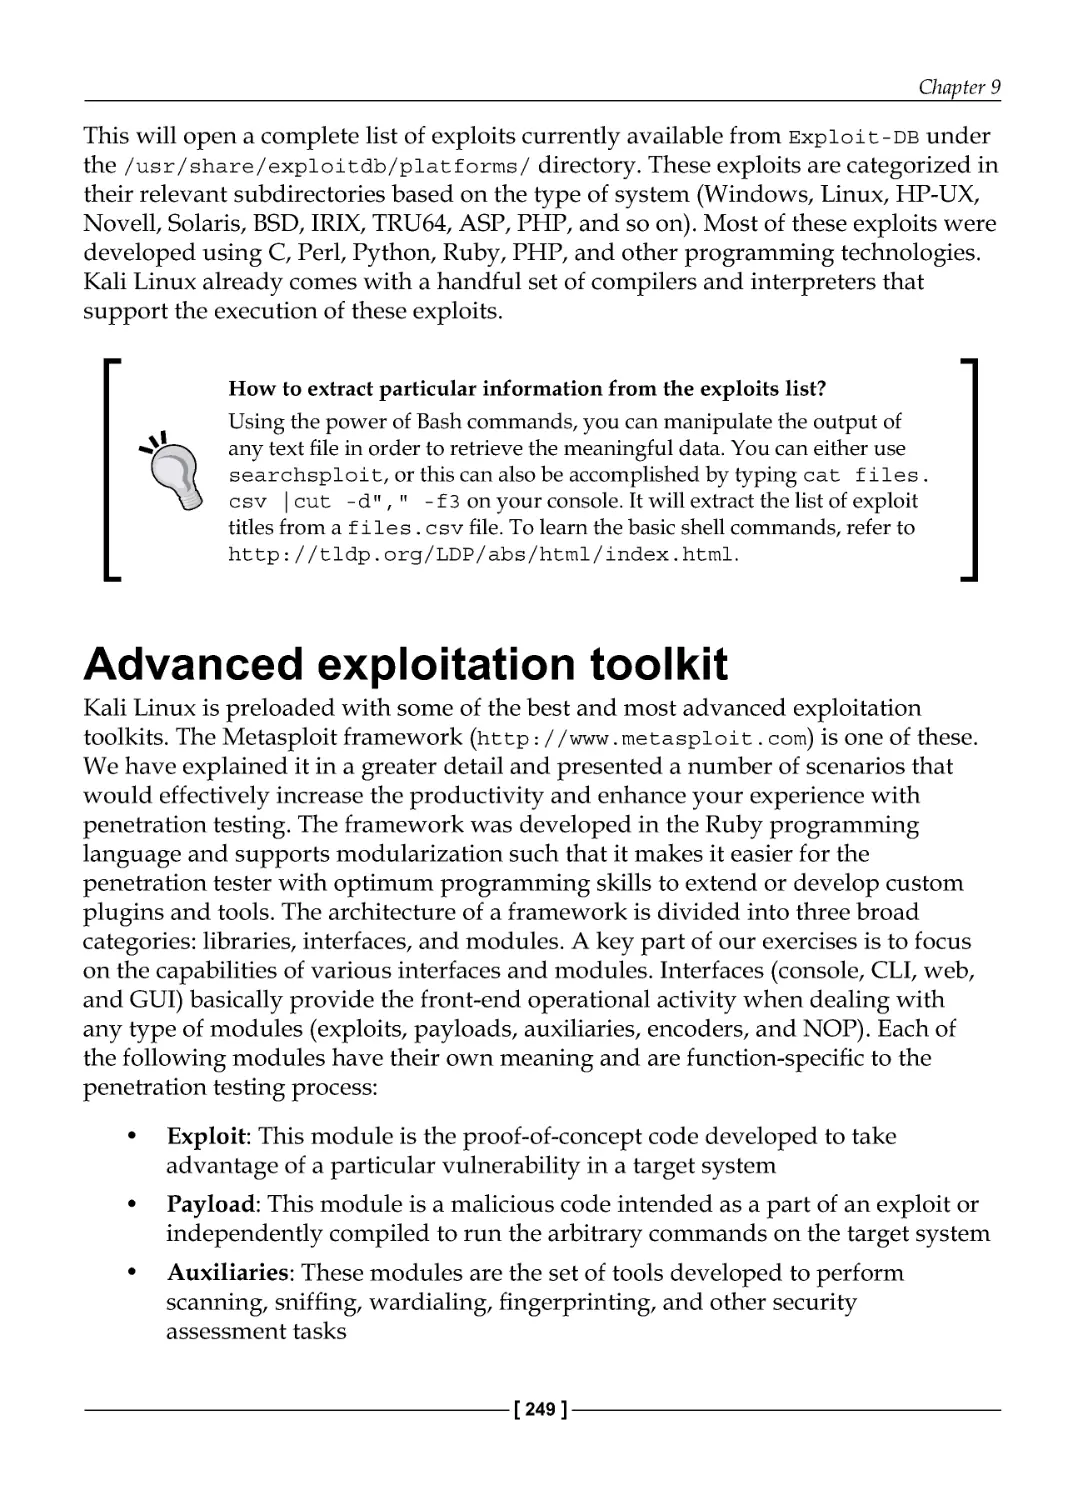 Advanced exploitation toolkit